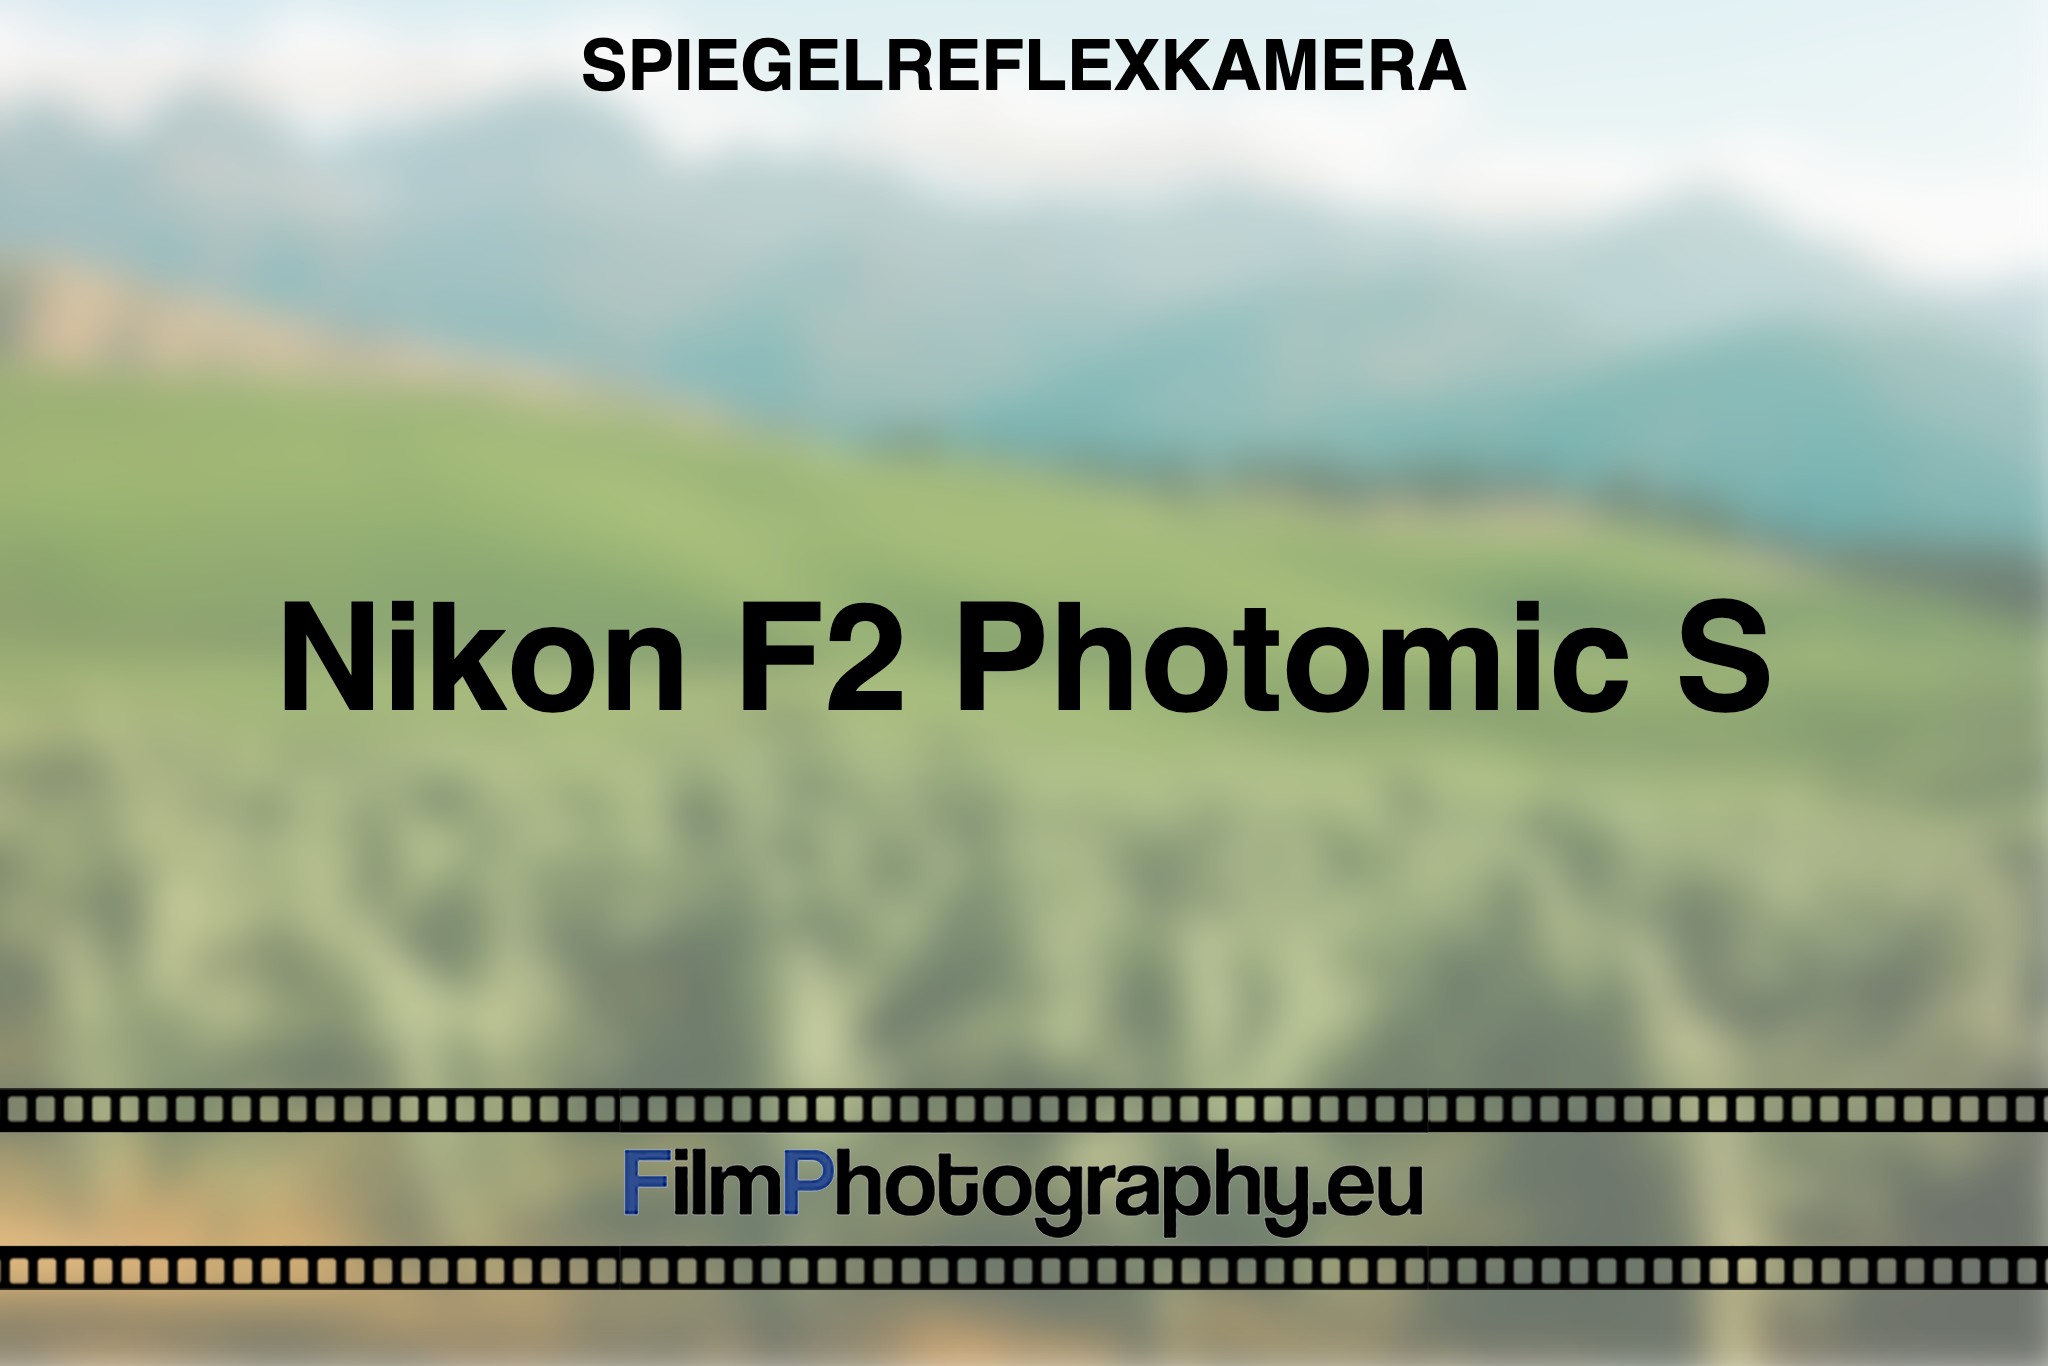 nikon-f2-photomic-s-spiegelreflexkamera-bnv